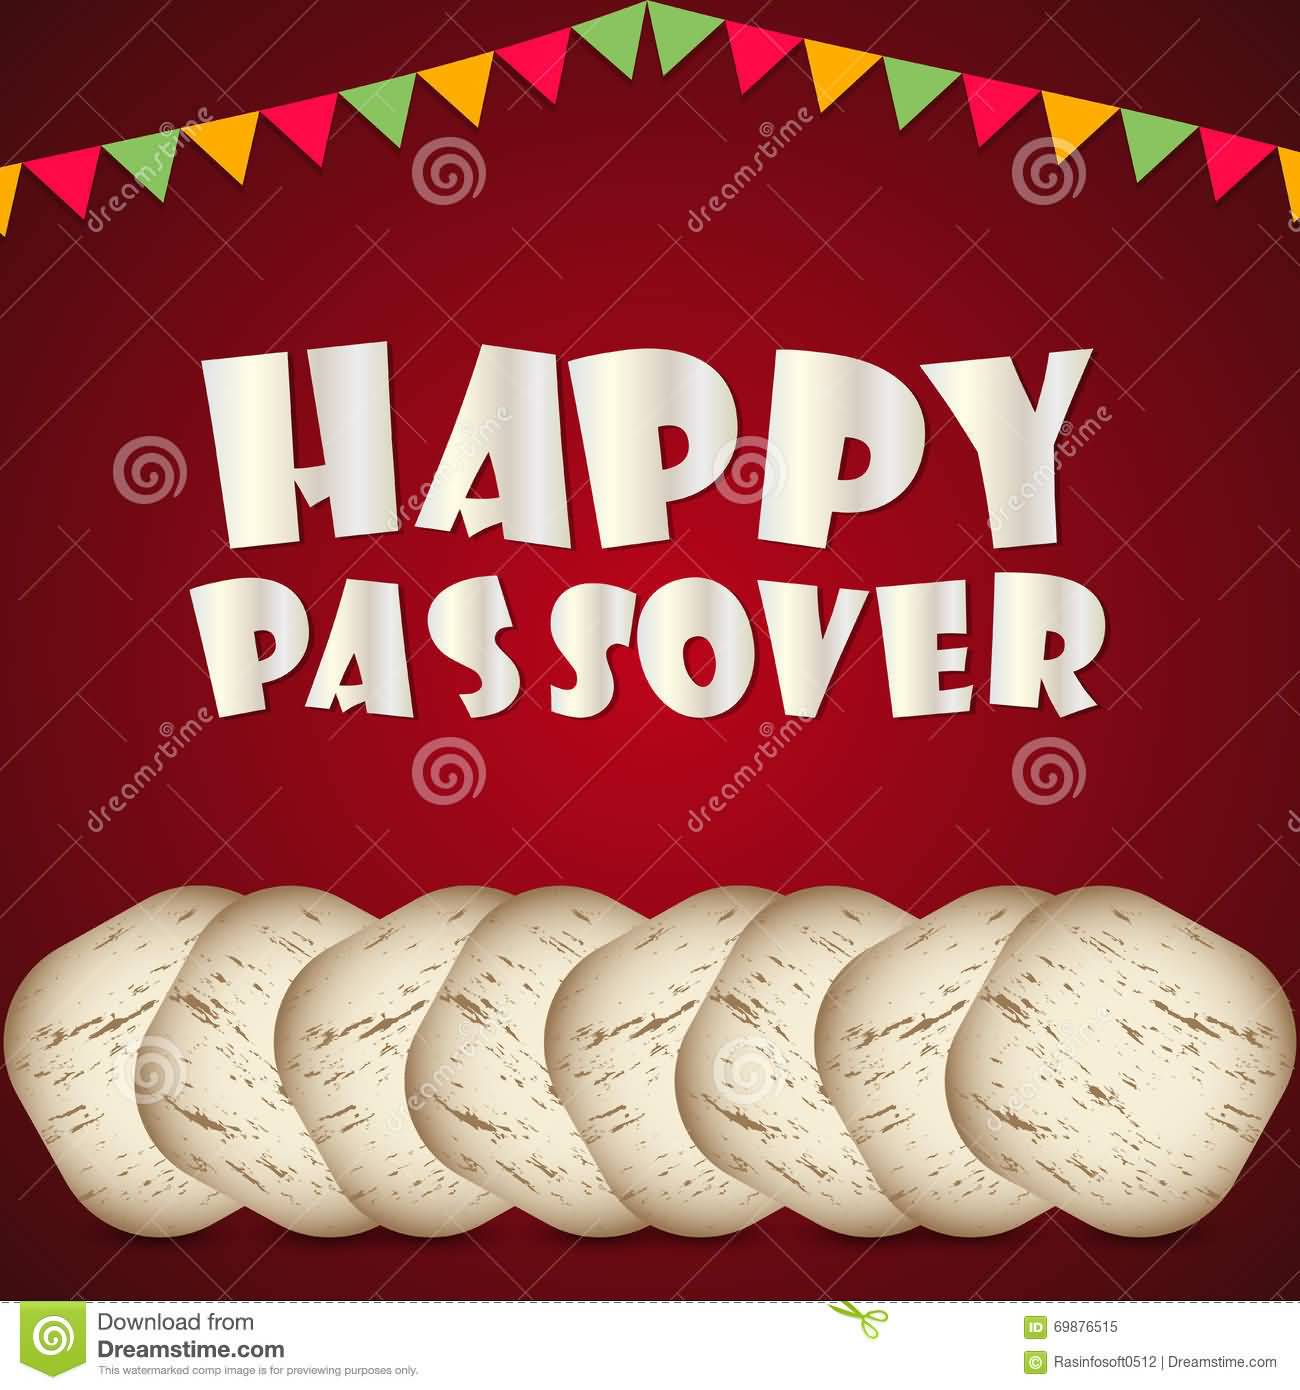 Happy Passover Matzos Illustration